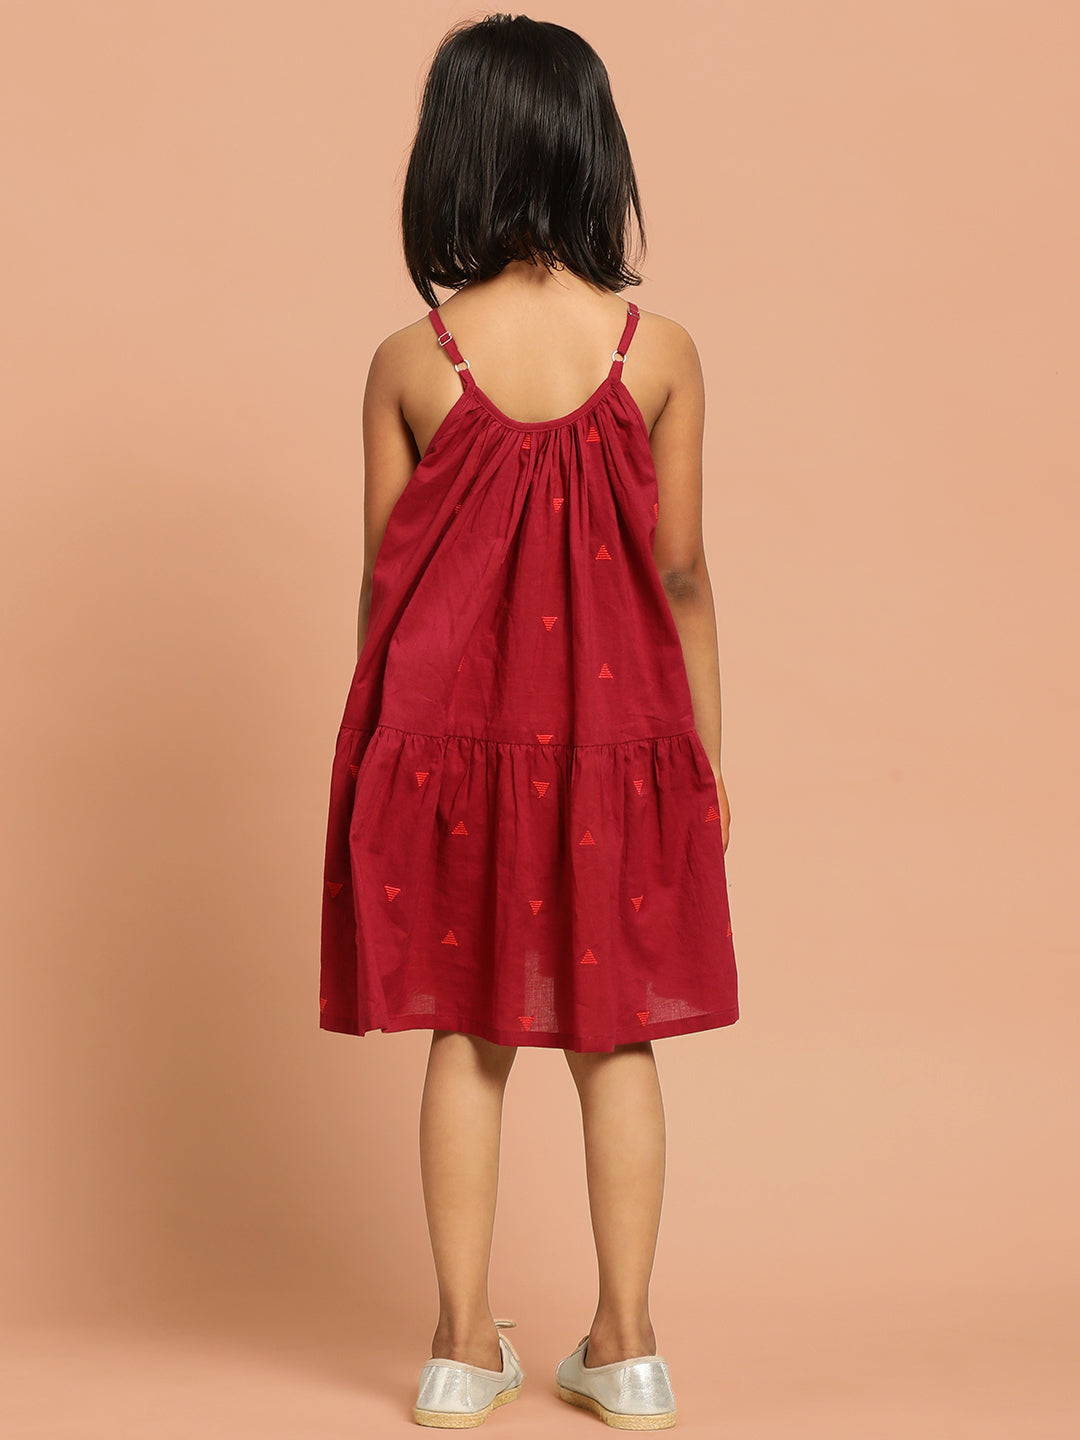 Cherry Dress